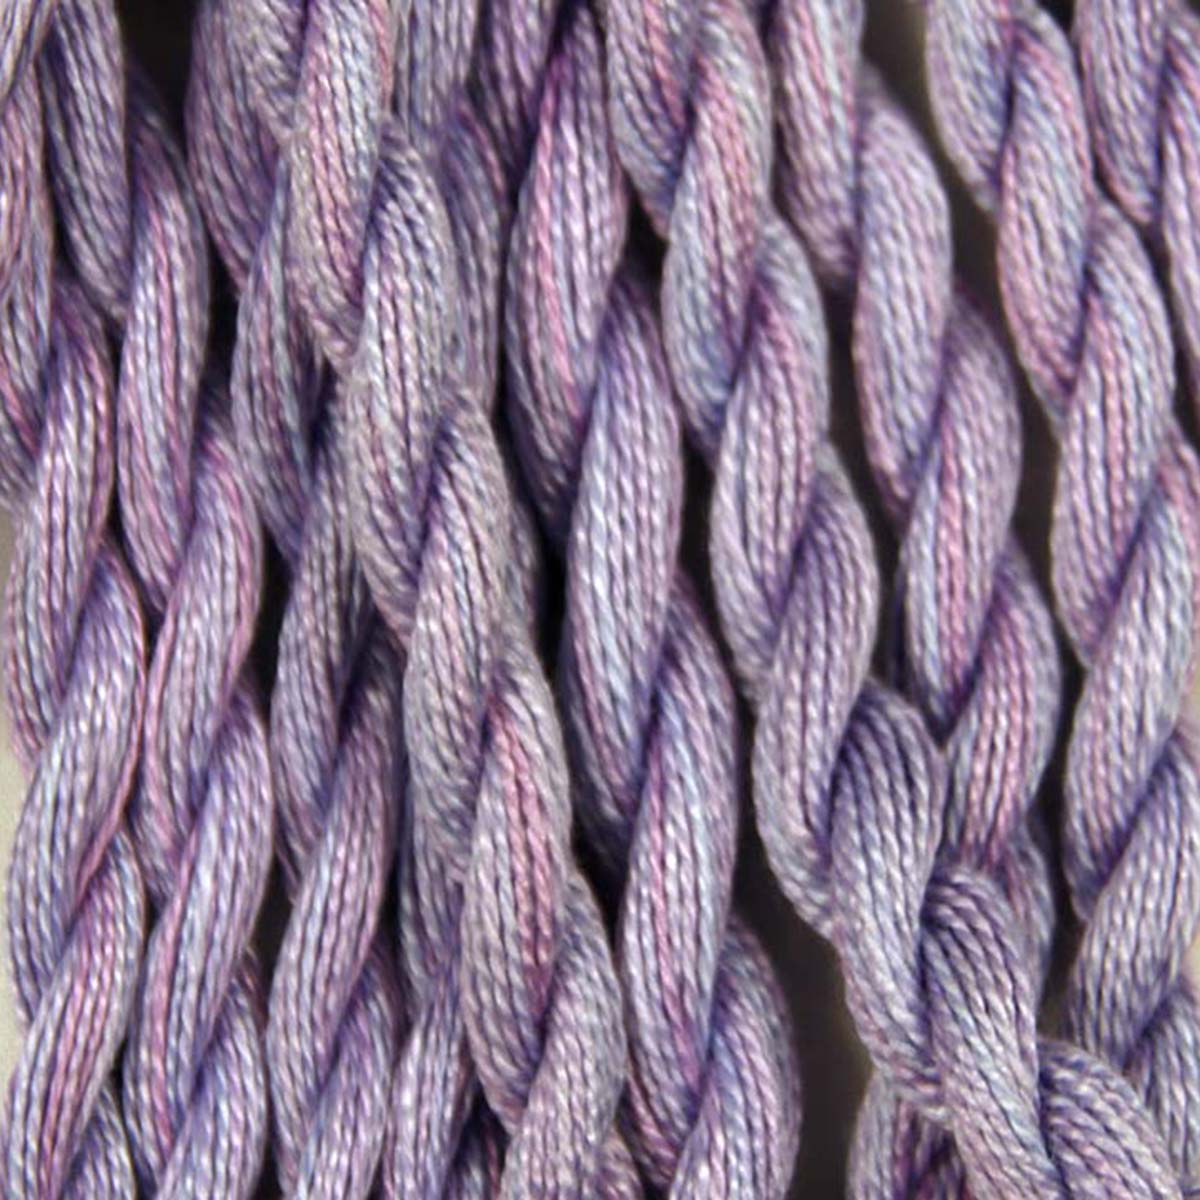 www.colourstreams.com.au Colour Streams Hand Dyed Swww.colourstreams.com.au Colour Streams Hand Dyed Cotton Threads Cotto Strands Slow Stitch Embroidery Textile Arts Fibre DL 1 Wisteria Purples